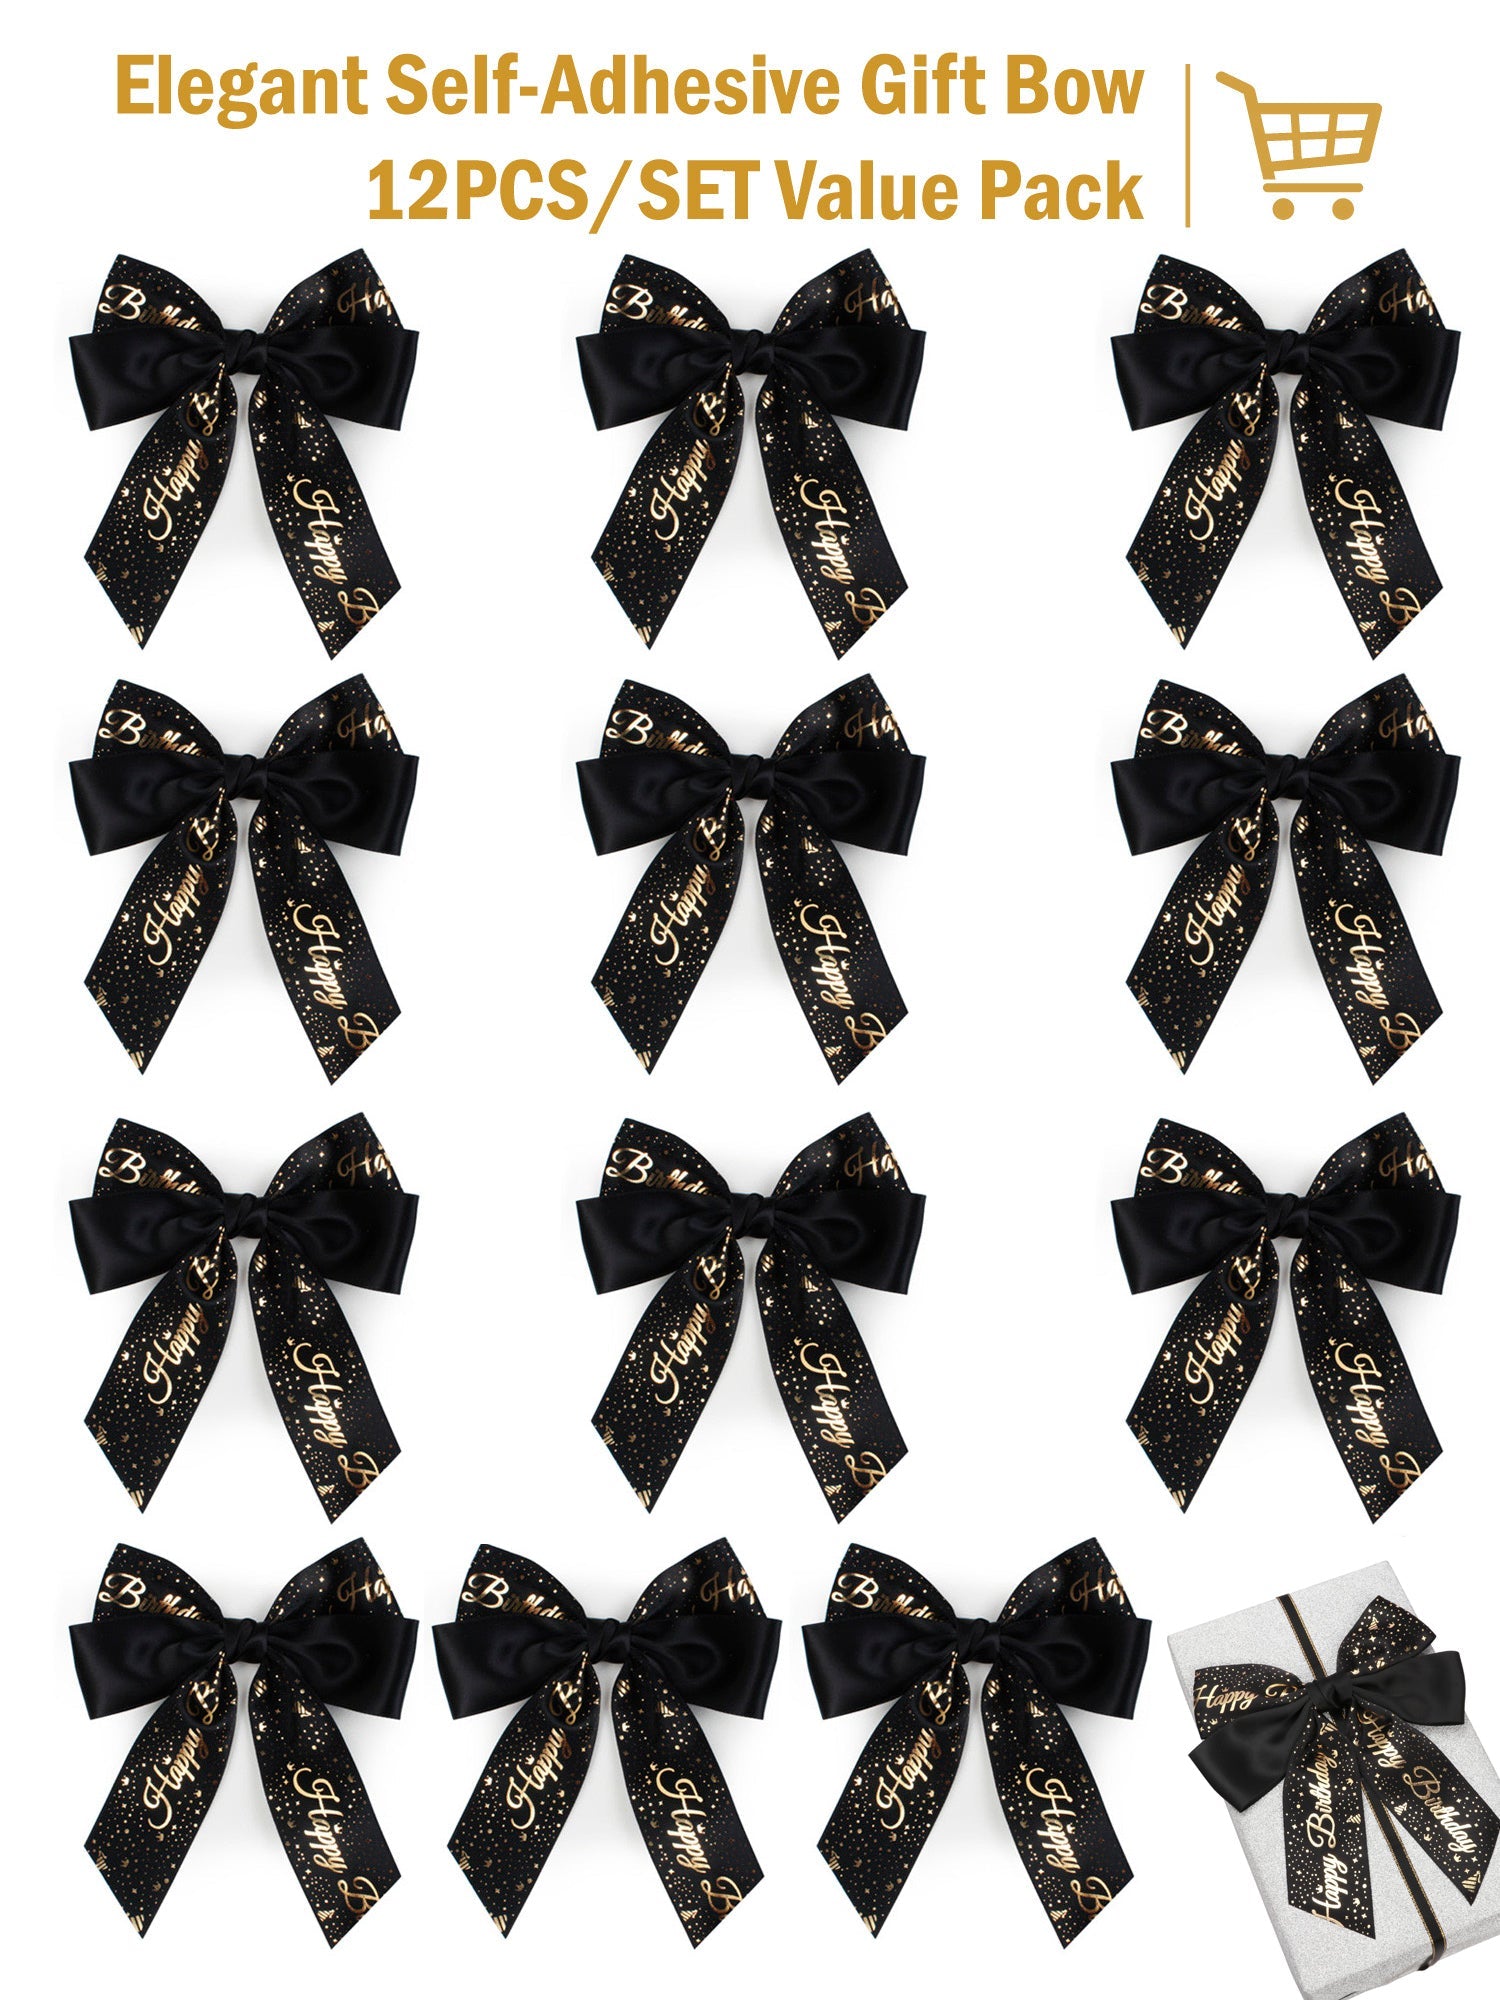 5 1/2" x 6 3/8" Double Face Satin Luxury Happy Birthday Gift Bow Bundle - Black/Gold - 12 Bows/Bundle